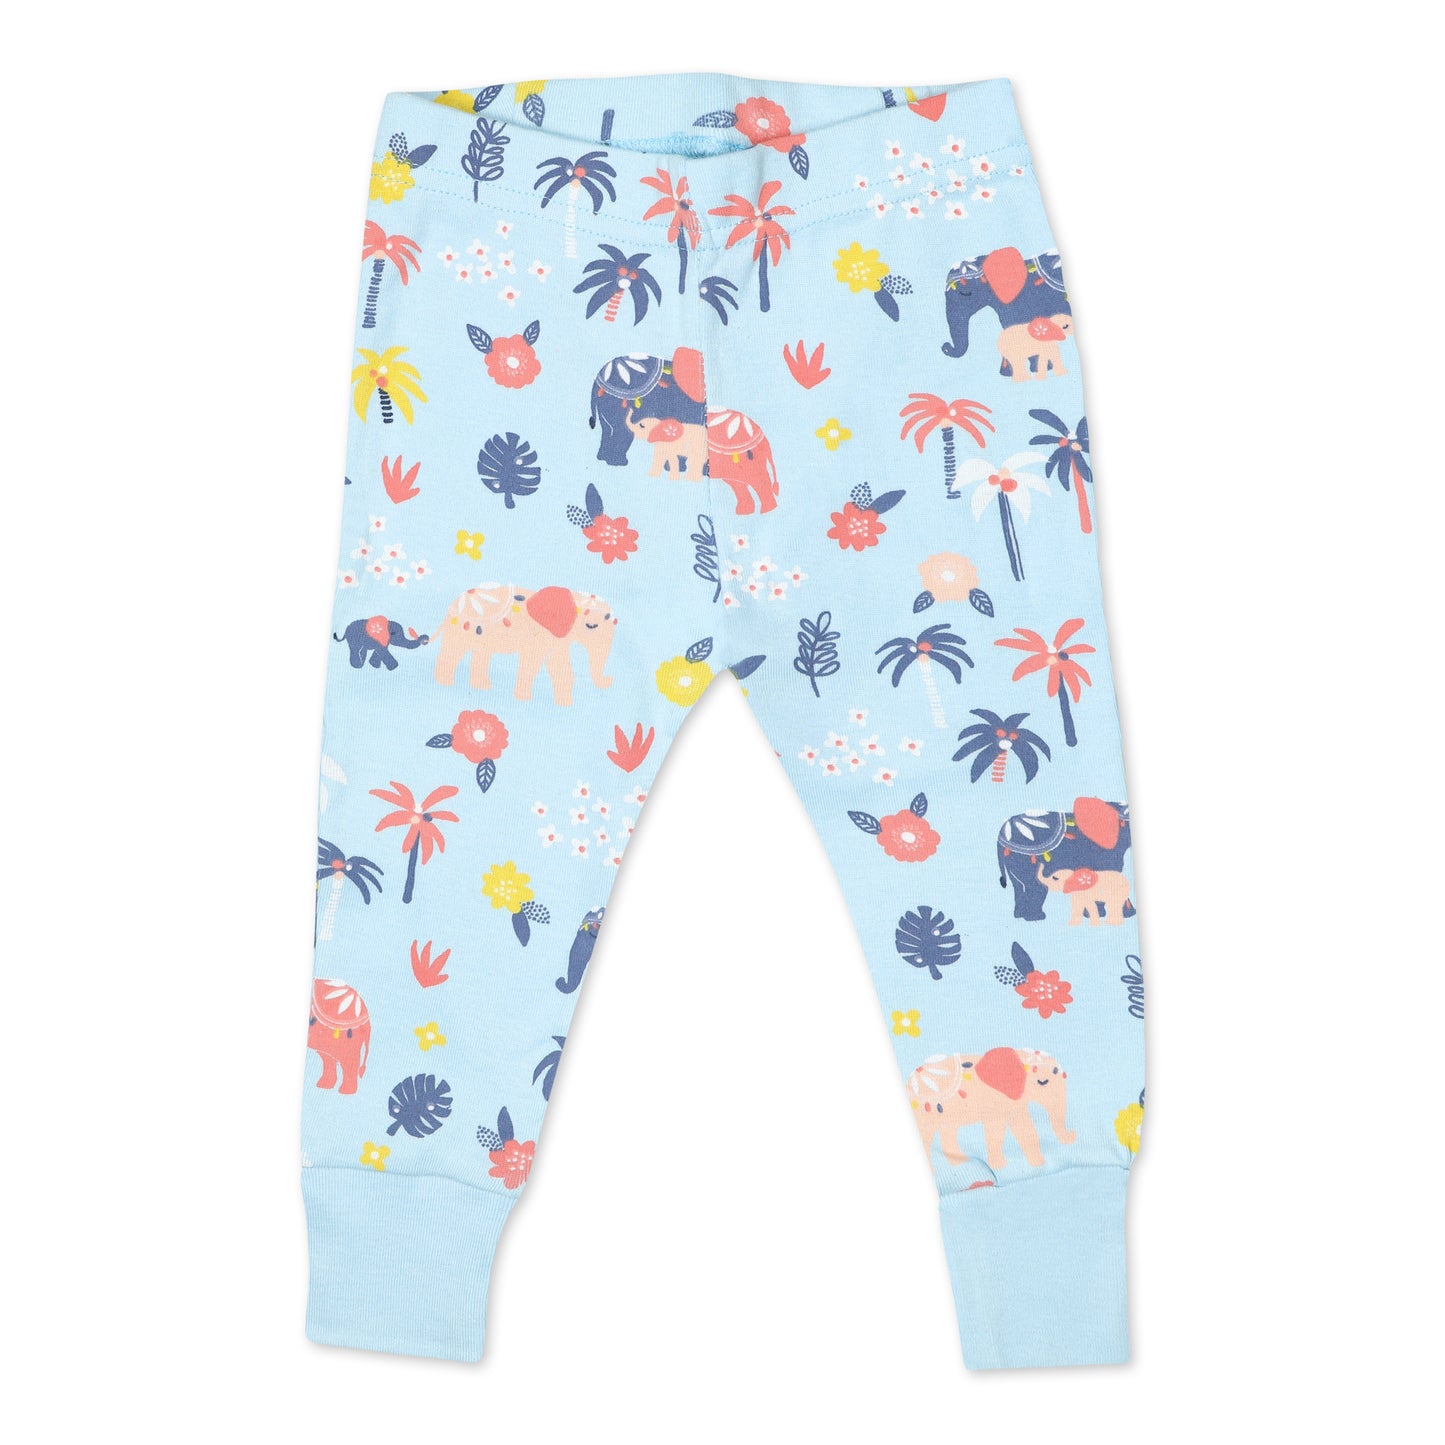 4-Piece Organic Cotton Pajama Set in Elephant Blooms Print